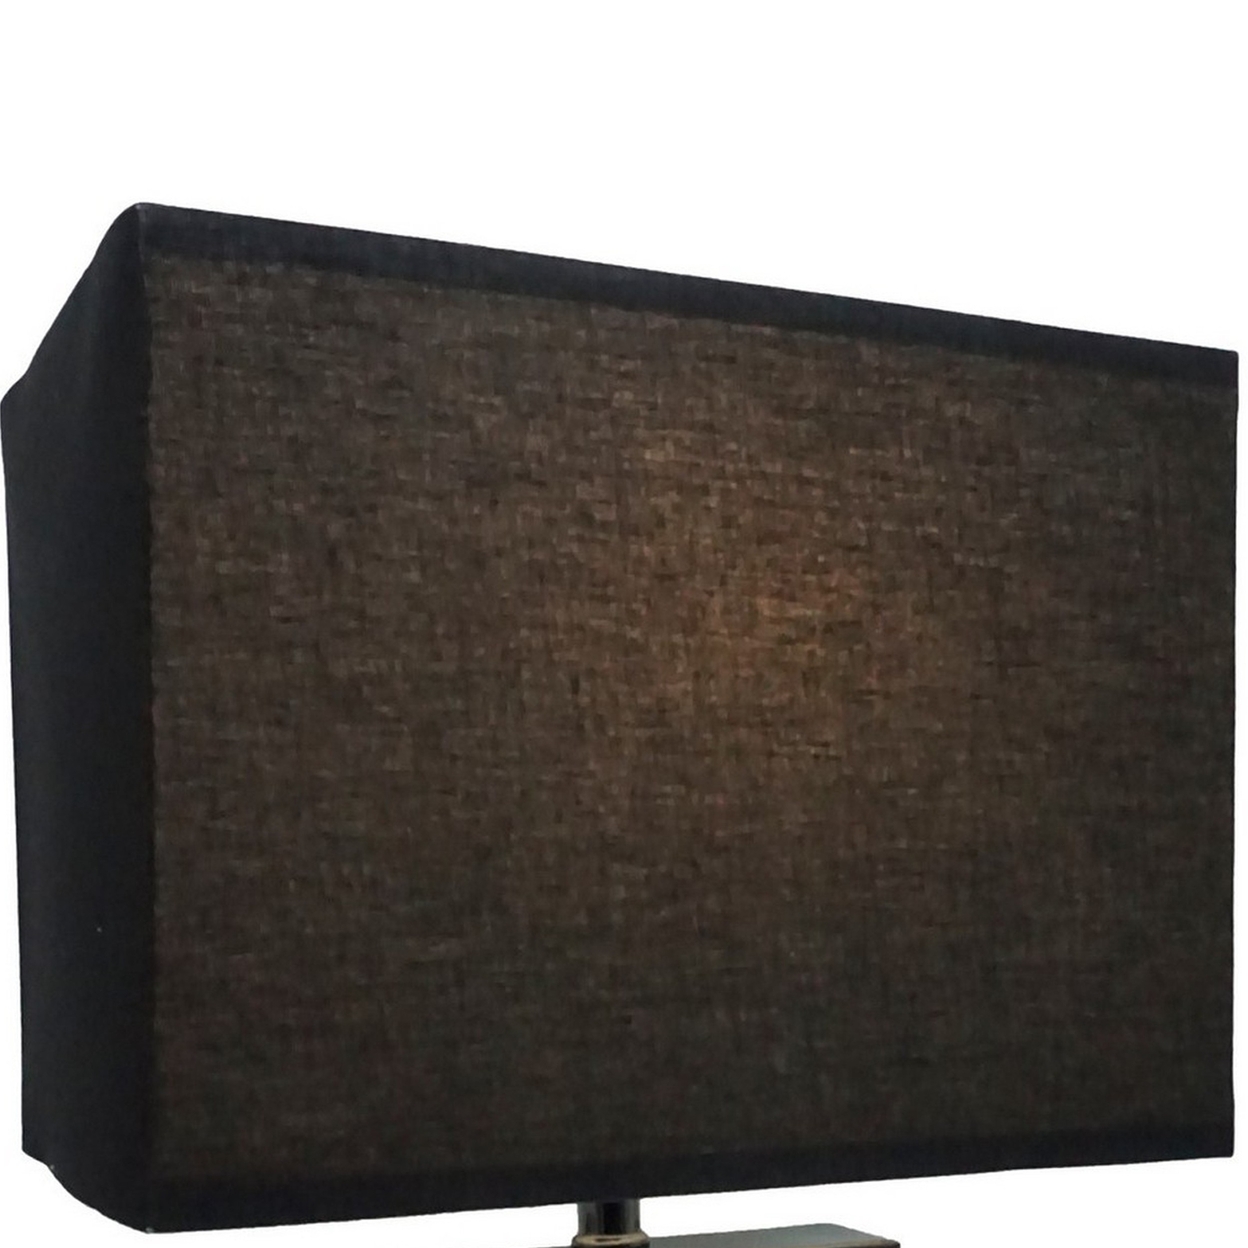 Rohi 22 Inch Table Lamp, Black Fabric Shade, Nickel Base, LED Accents- Saltoro Sherpi